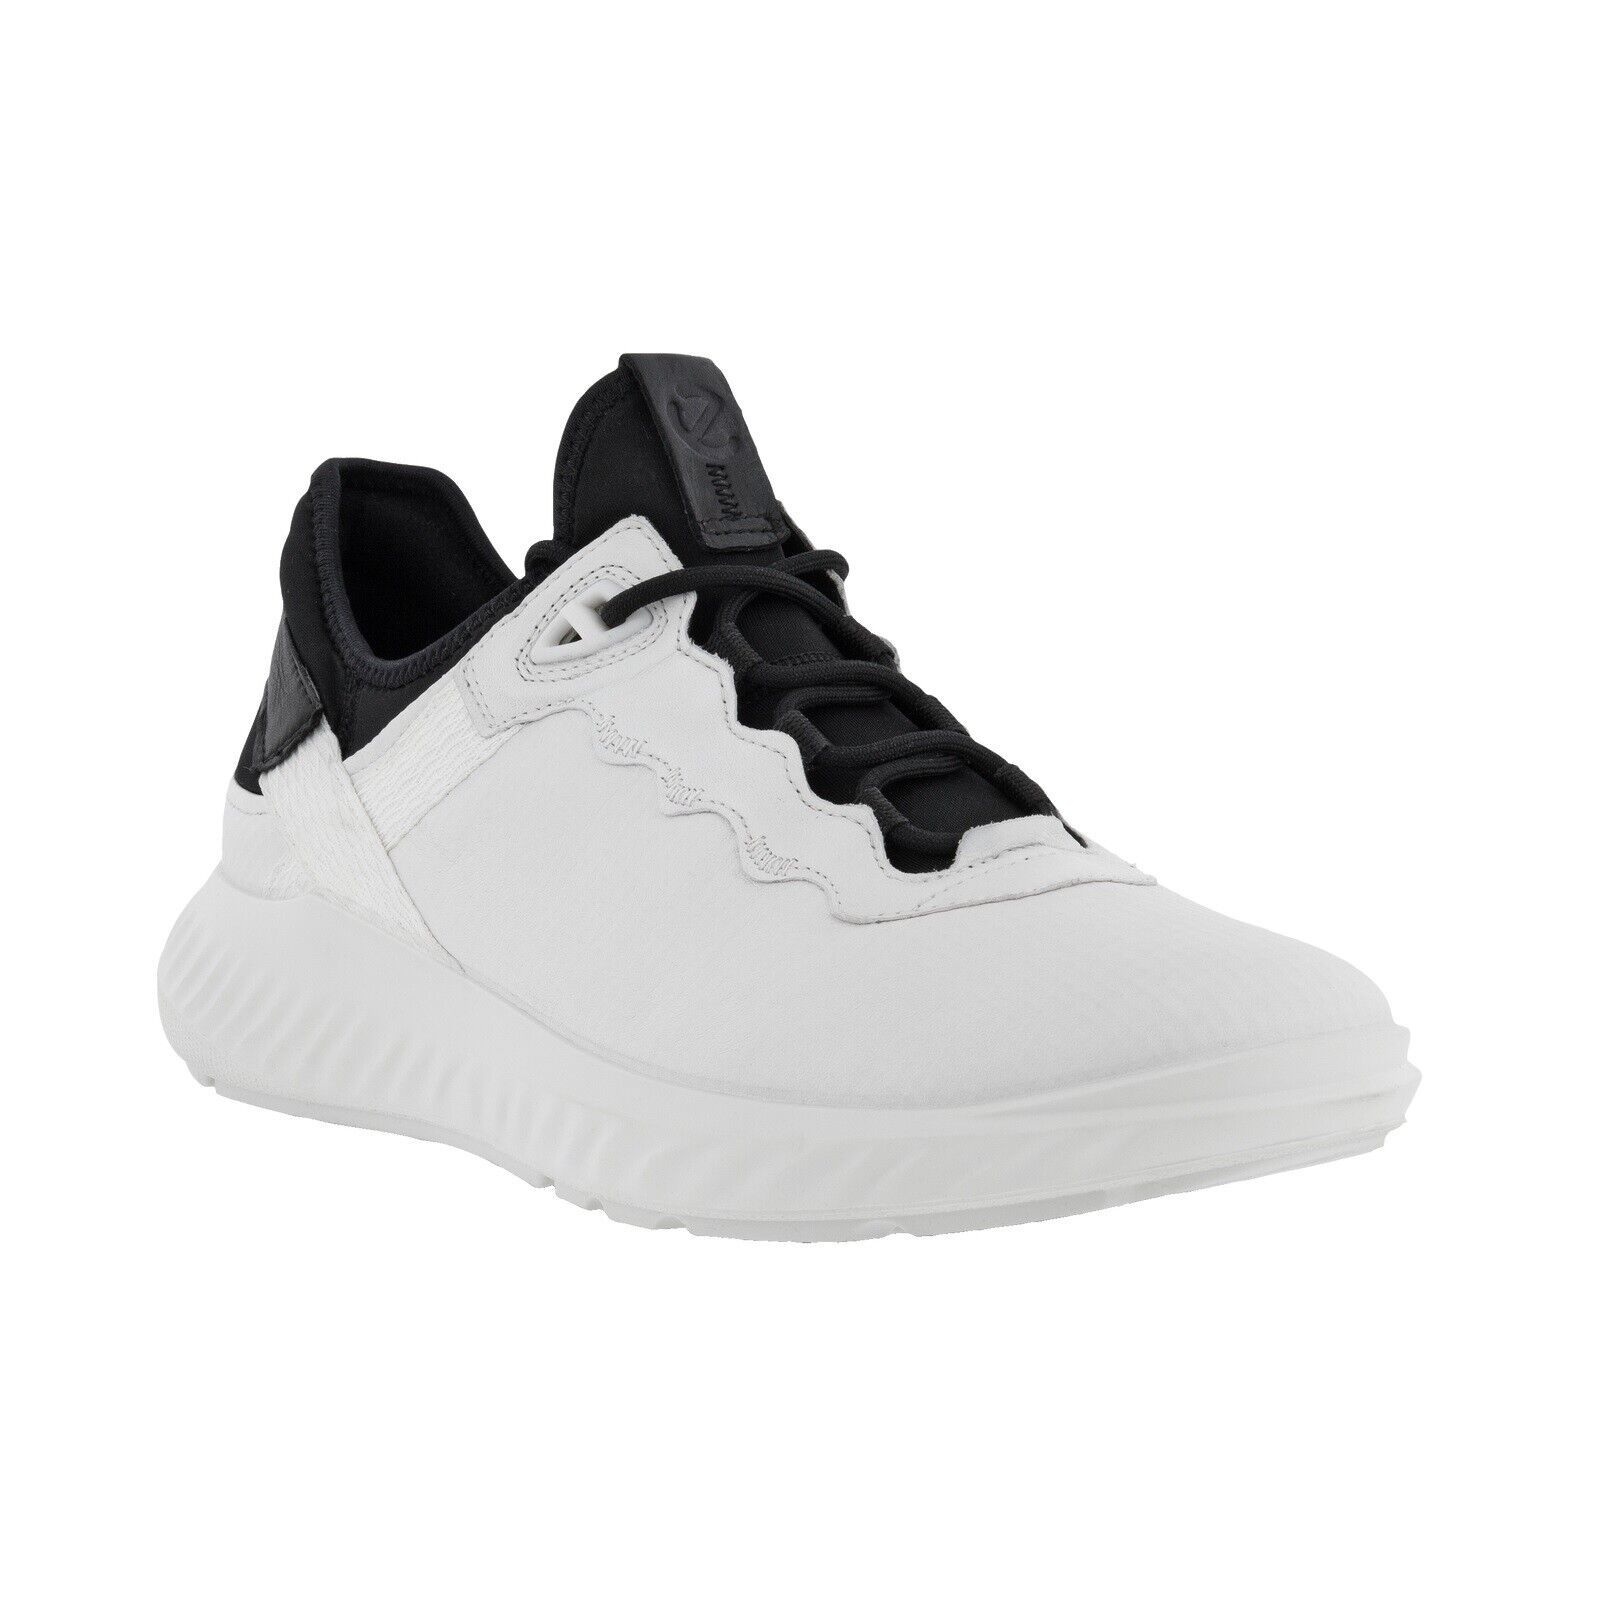 Primary image for Ecco Men's ATH-1FM Luxe Tie Leather Sneaker Streetwear Comfort Shoe White Black